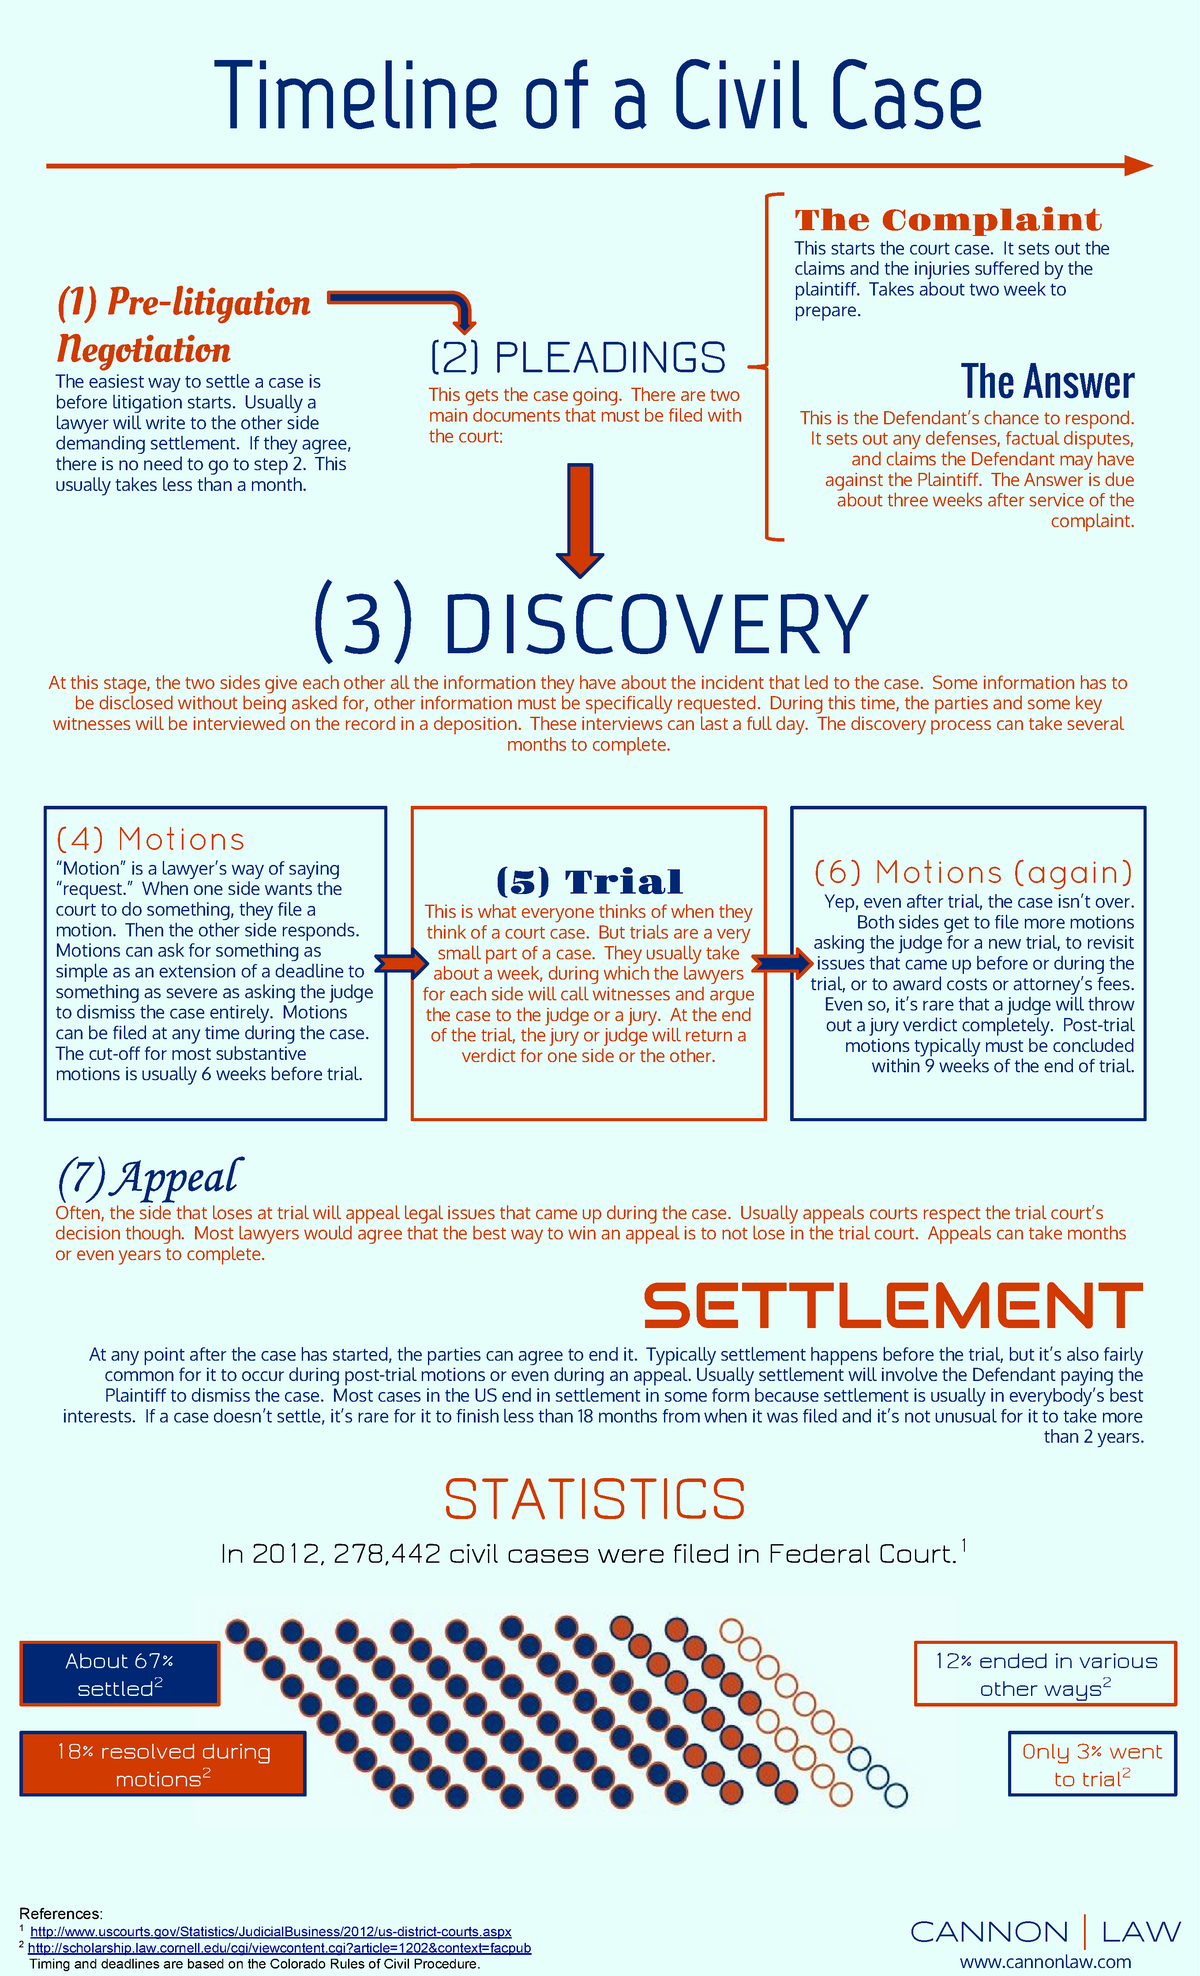 Graphic Timeline of a Civil Case Procedure CANNON LAW cannonlaw